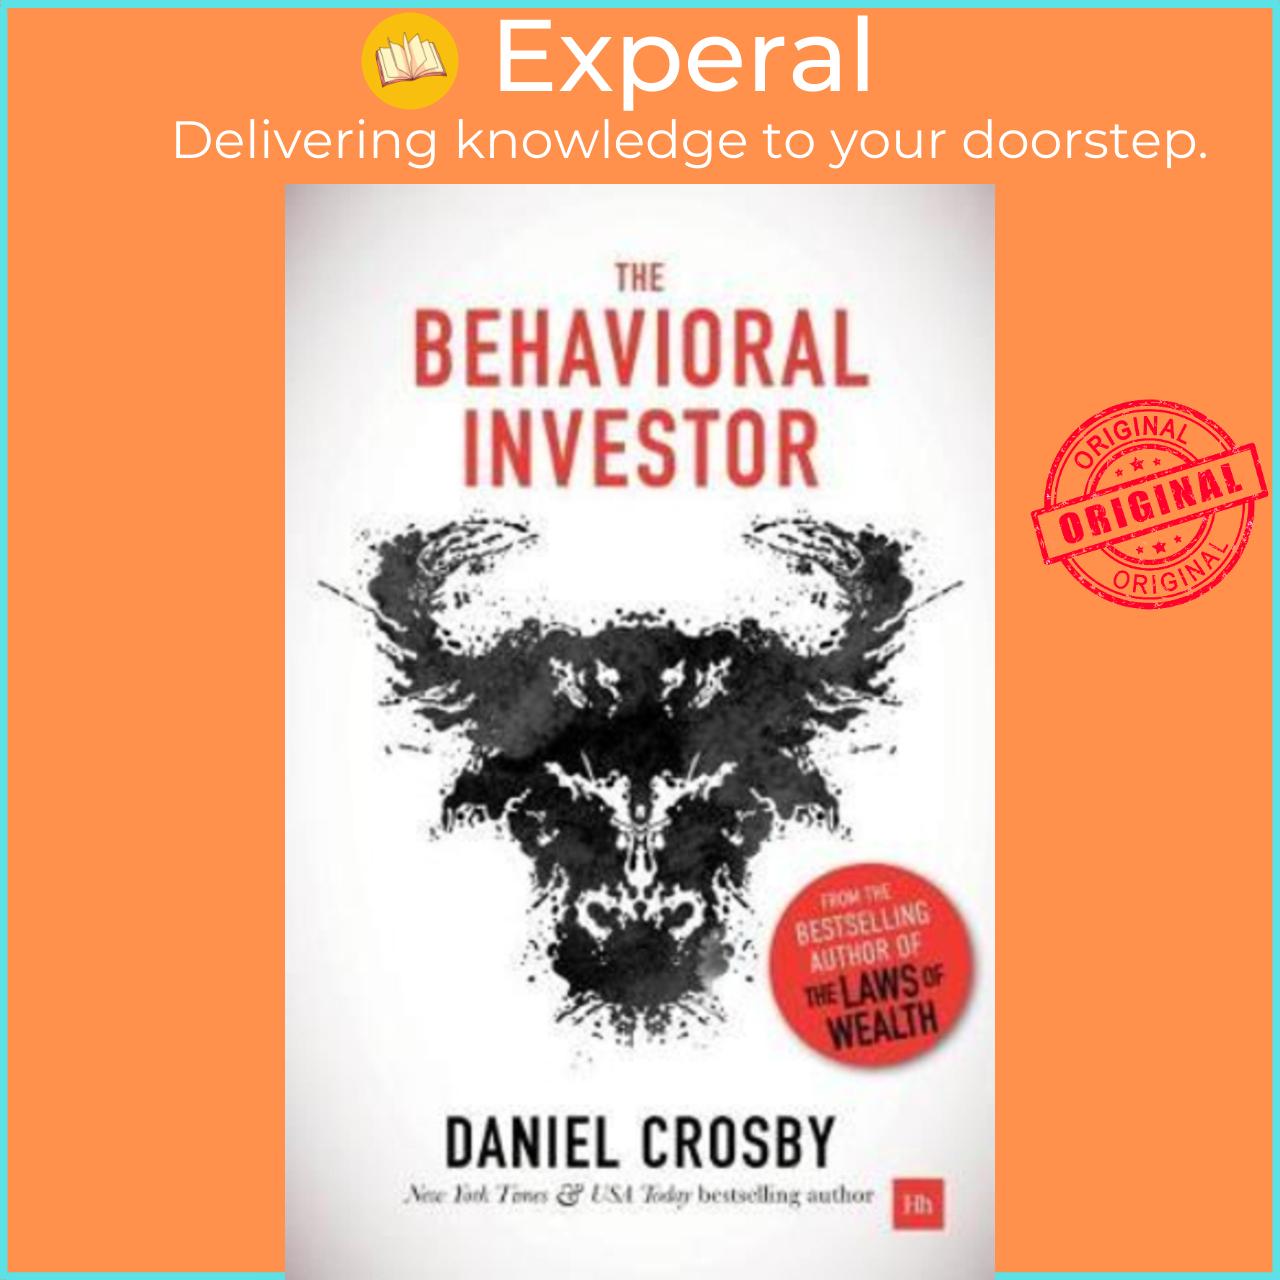 Hình ảnh Sách - The Behavioral Investor by Daniel Crosby (UK edition, hardcover)